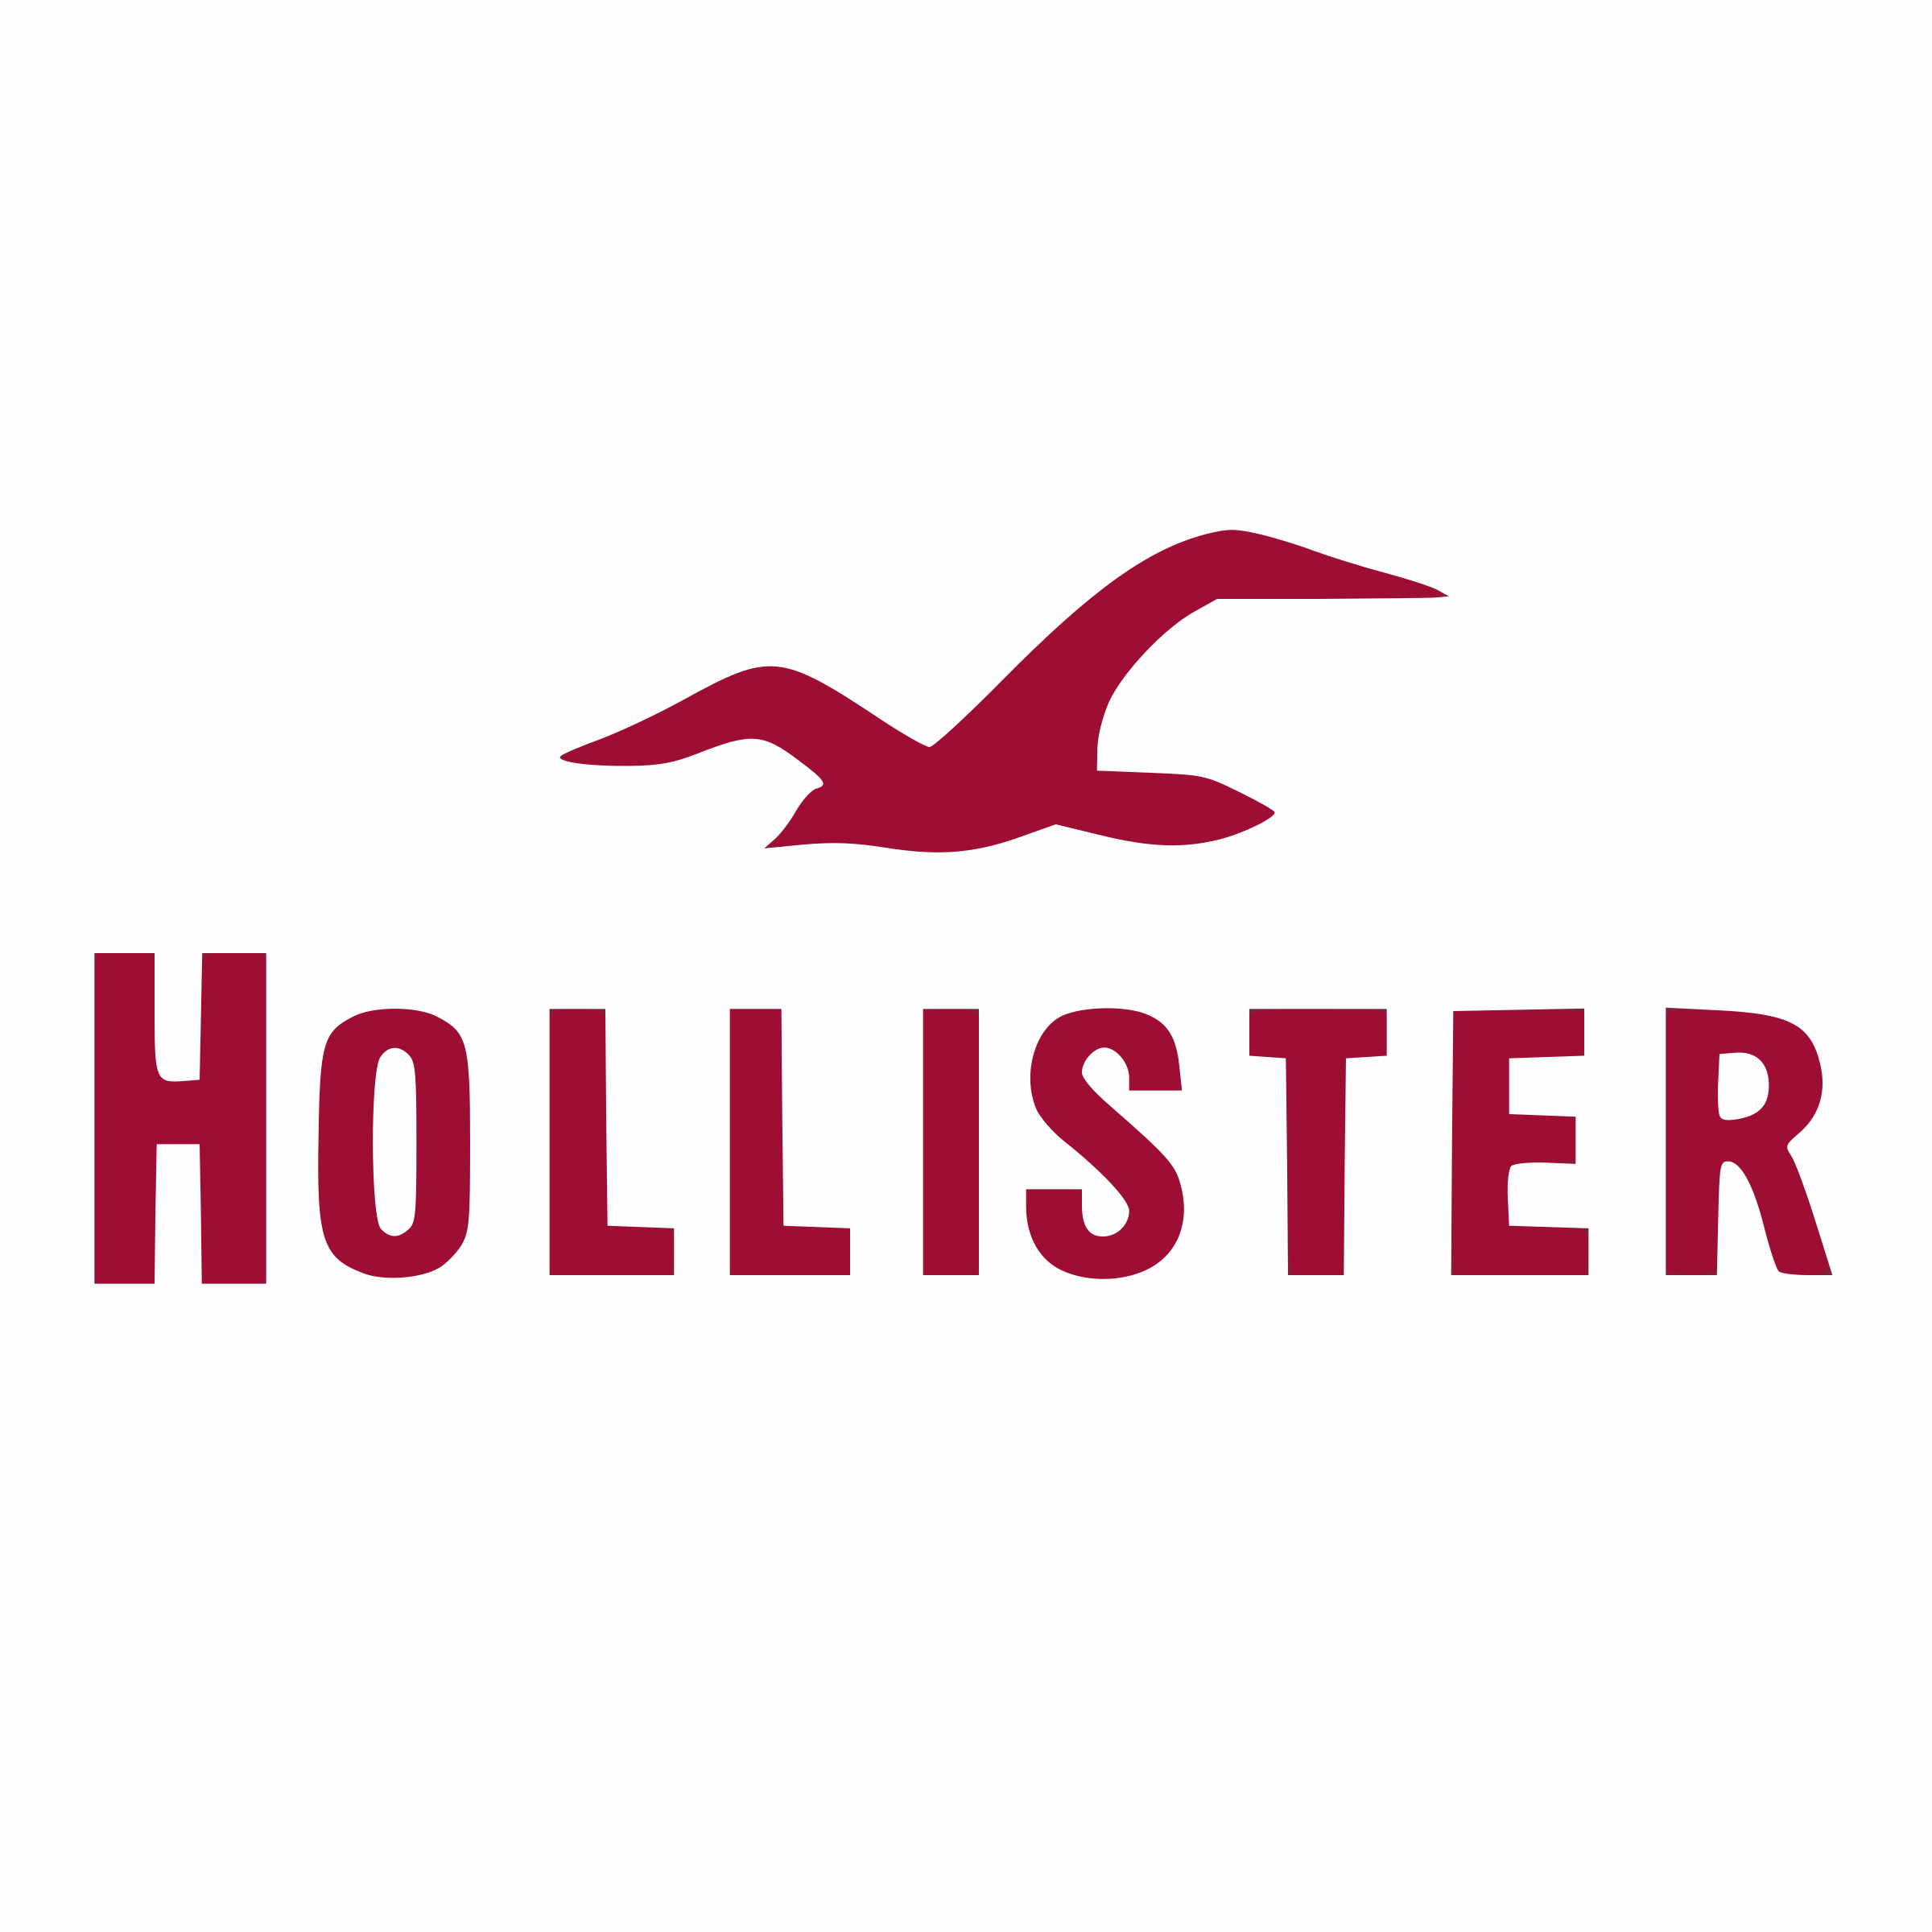 Hollister es logo